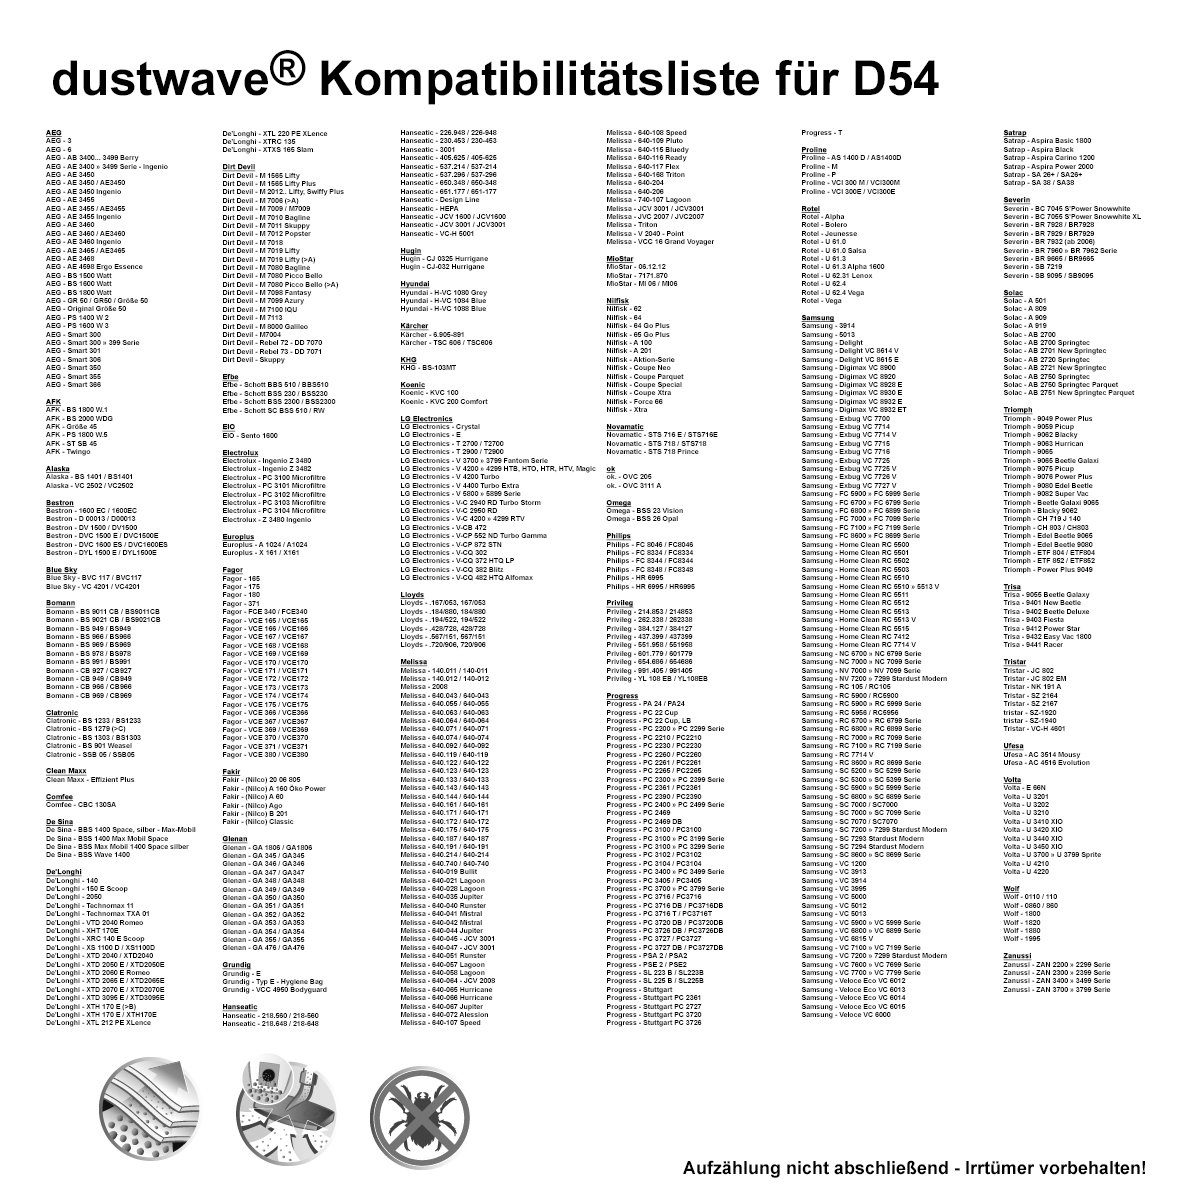 Test-Set, Standard Test-Set, AmazonBasics 1 passend für (ca. W31 St., - 1 1 AmazonBasics zuschneidbar) + - 15x15cm W31, Staubsaugerbeutel Hepa-Filter Dustwave Staubsaugerbeutel